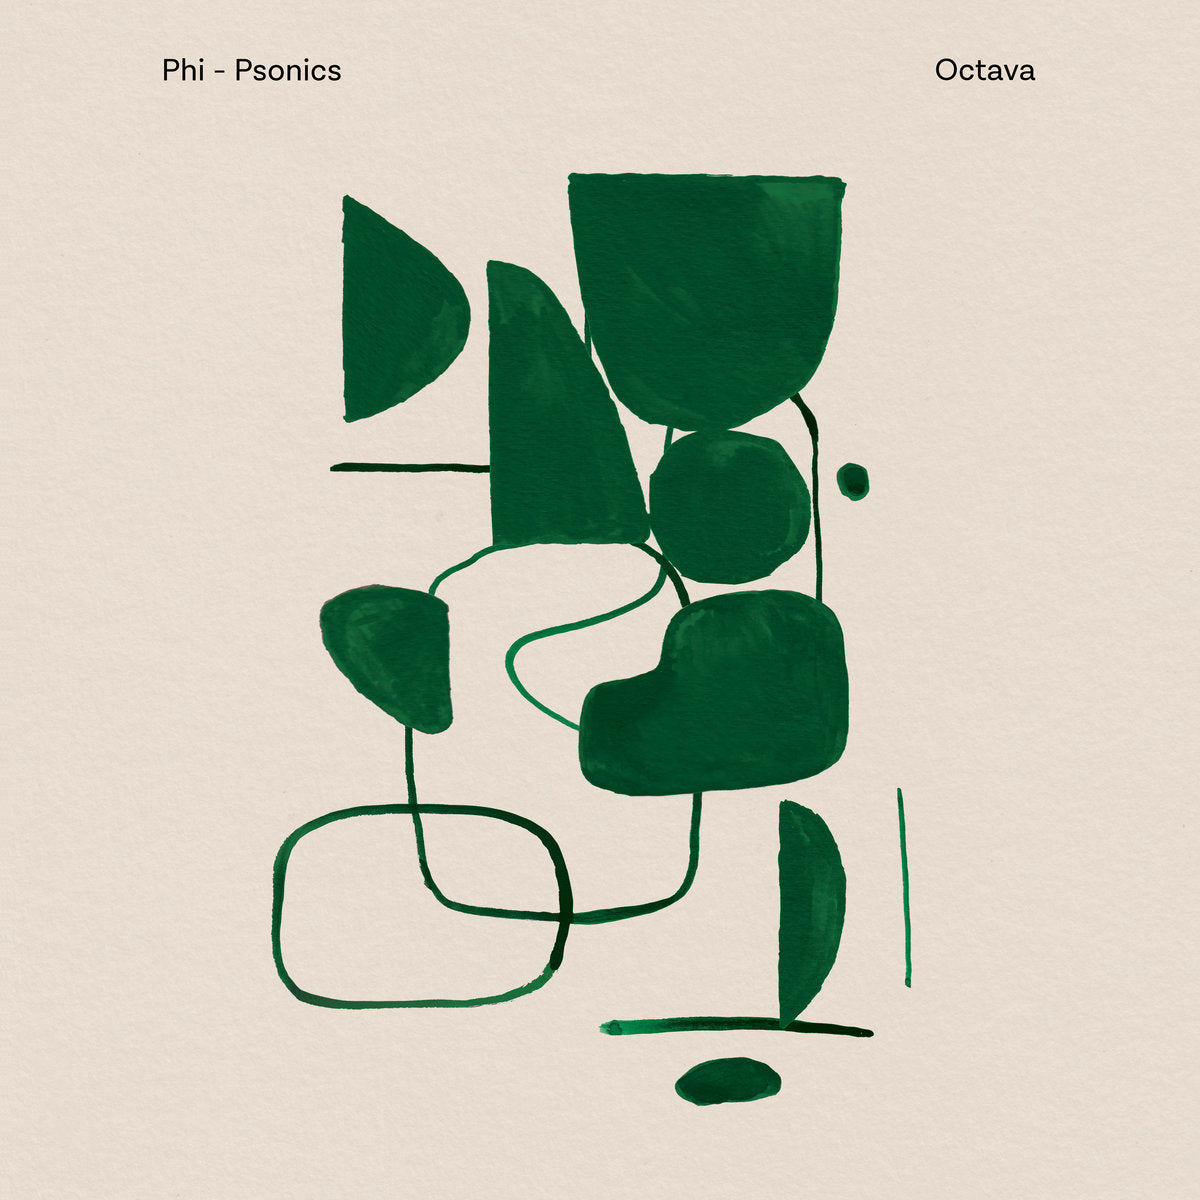 Phi-Psonics - Octava